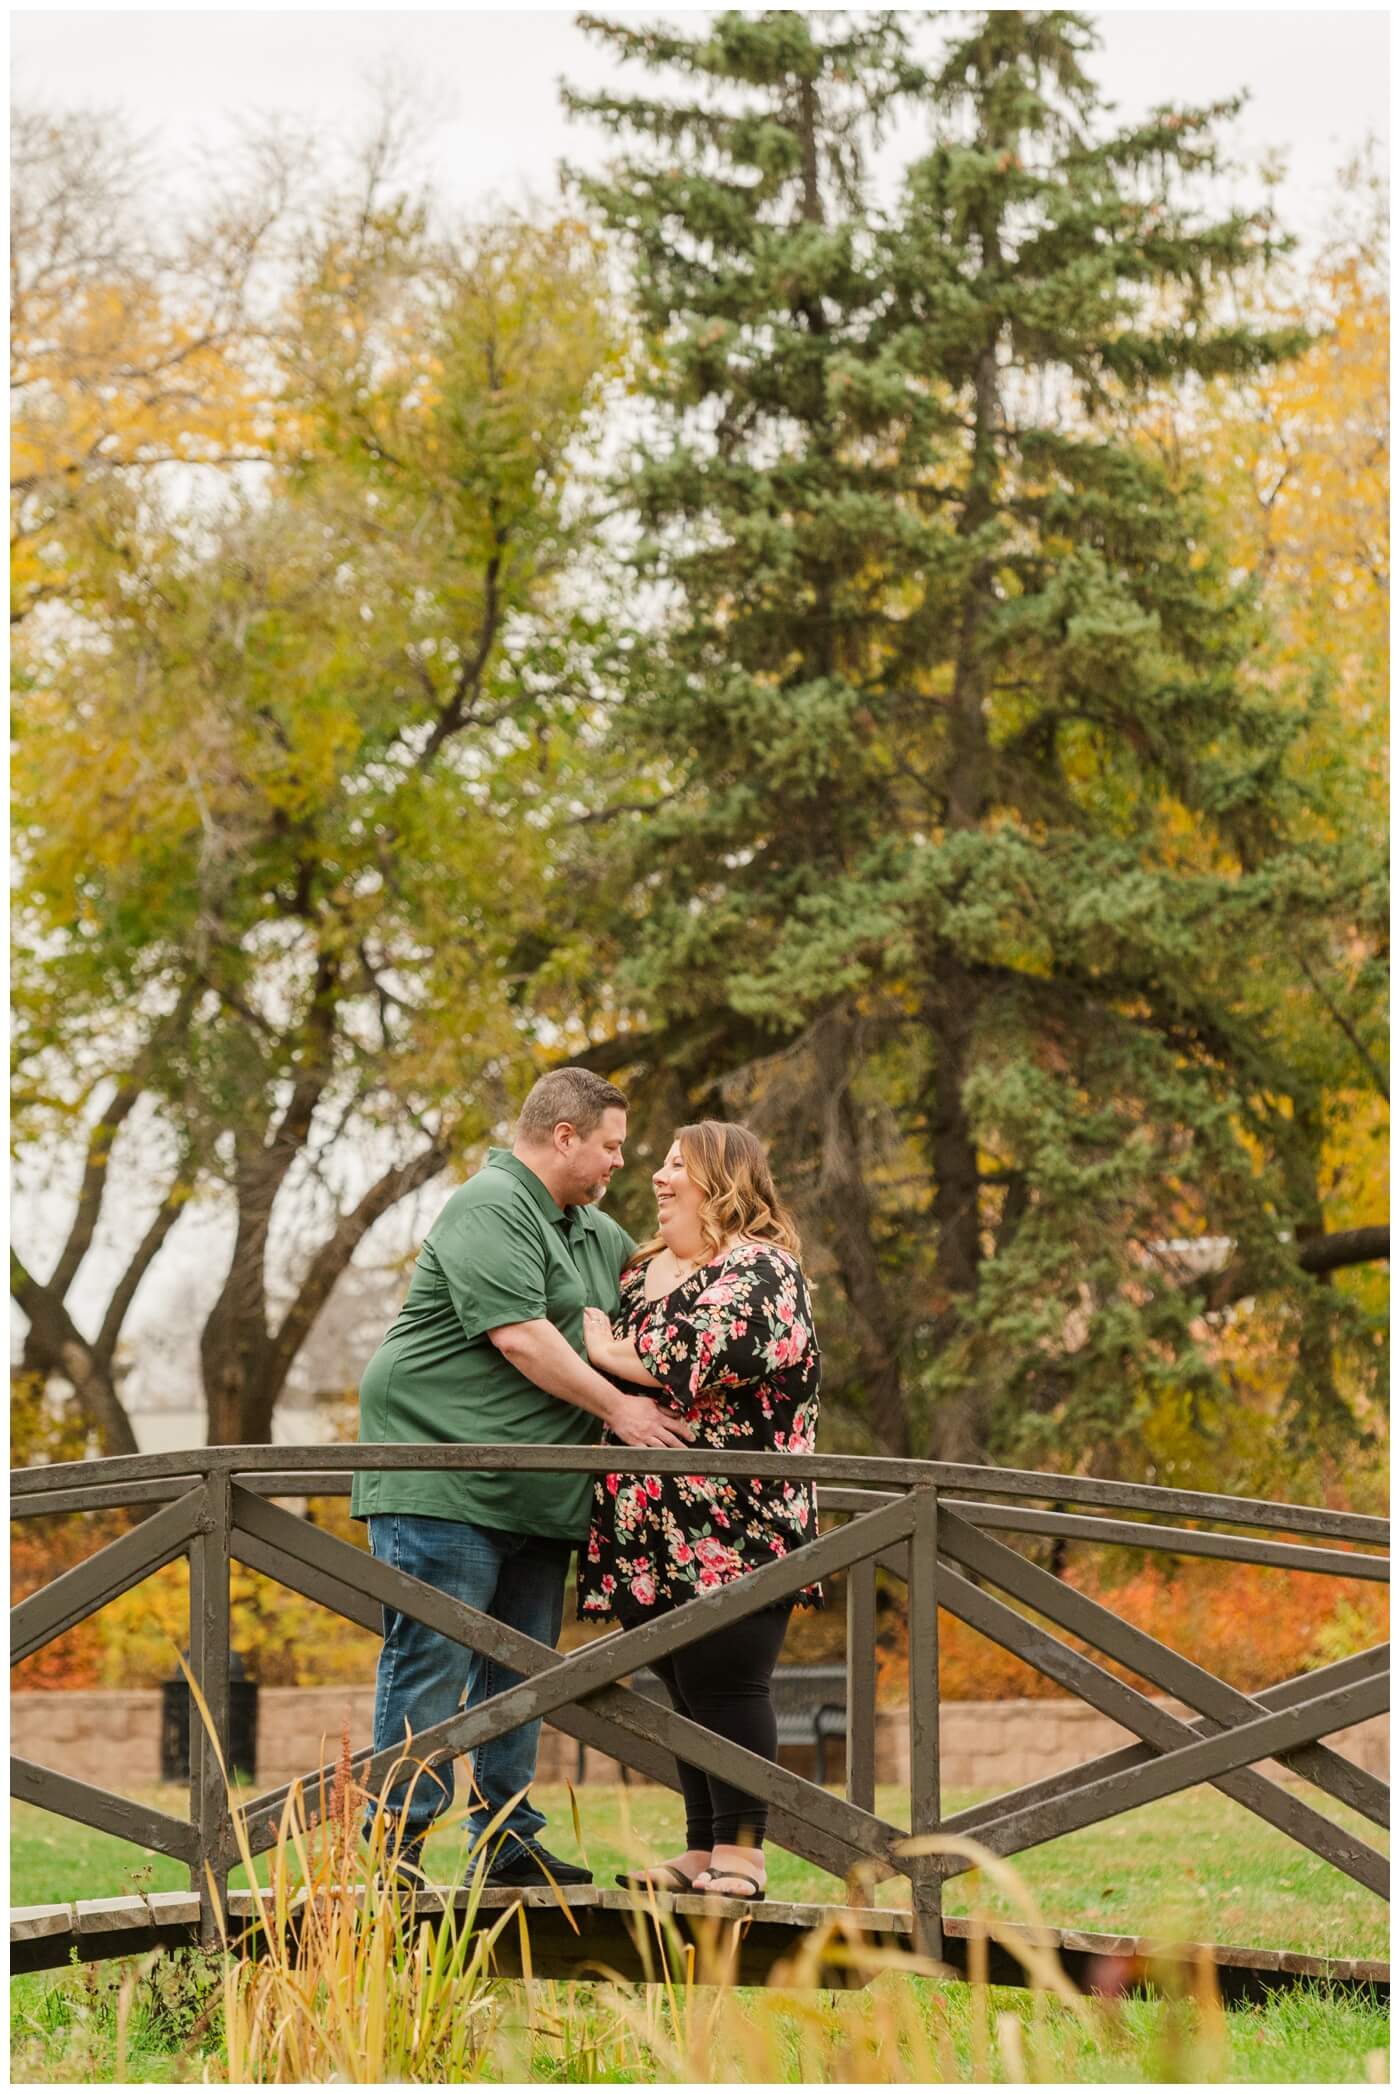 Scott & Ashley - Kiwanis Park Regina - 02 - Wife smiles at husband on bridge